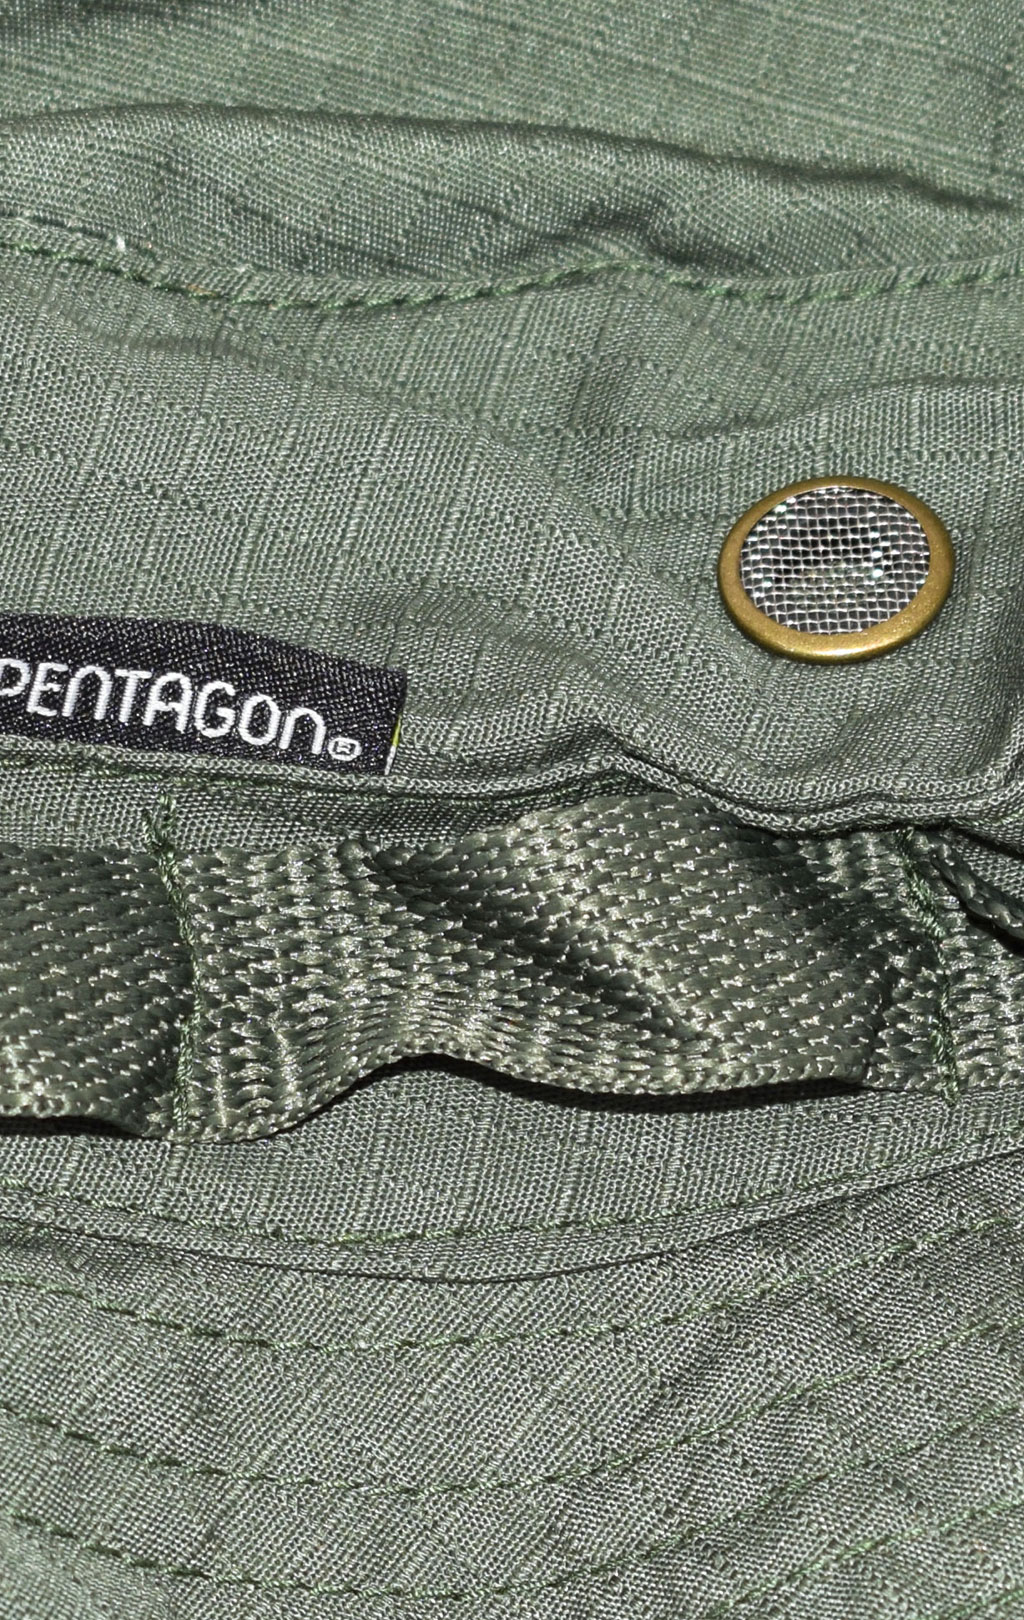 Панама Pentagon Jungle хлопок35%/полиэстр65% Rip-Stop green (olive) 06CG 13014 